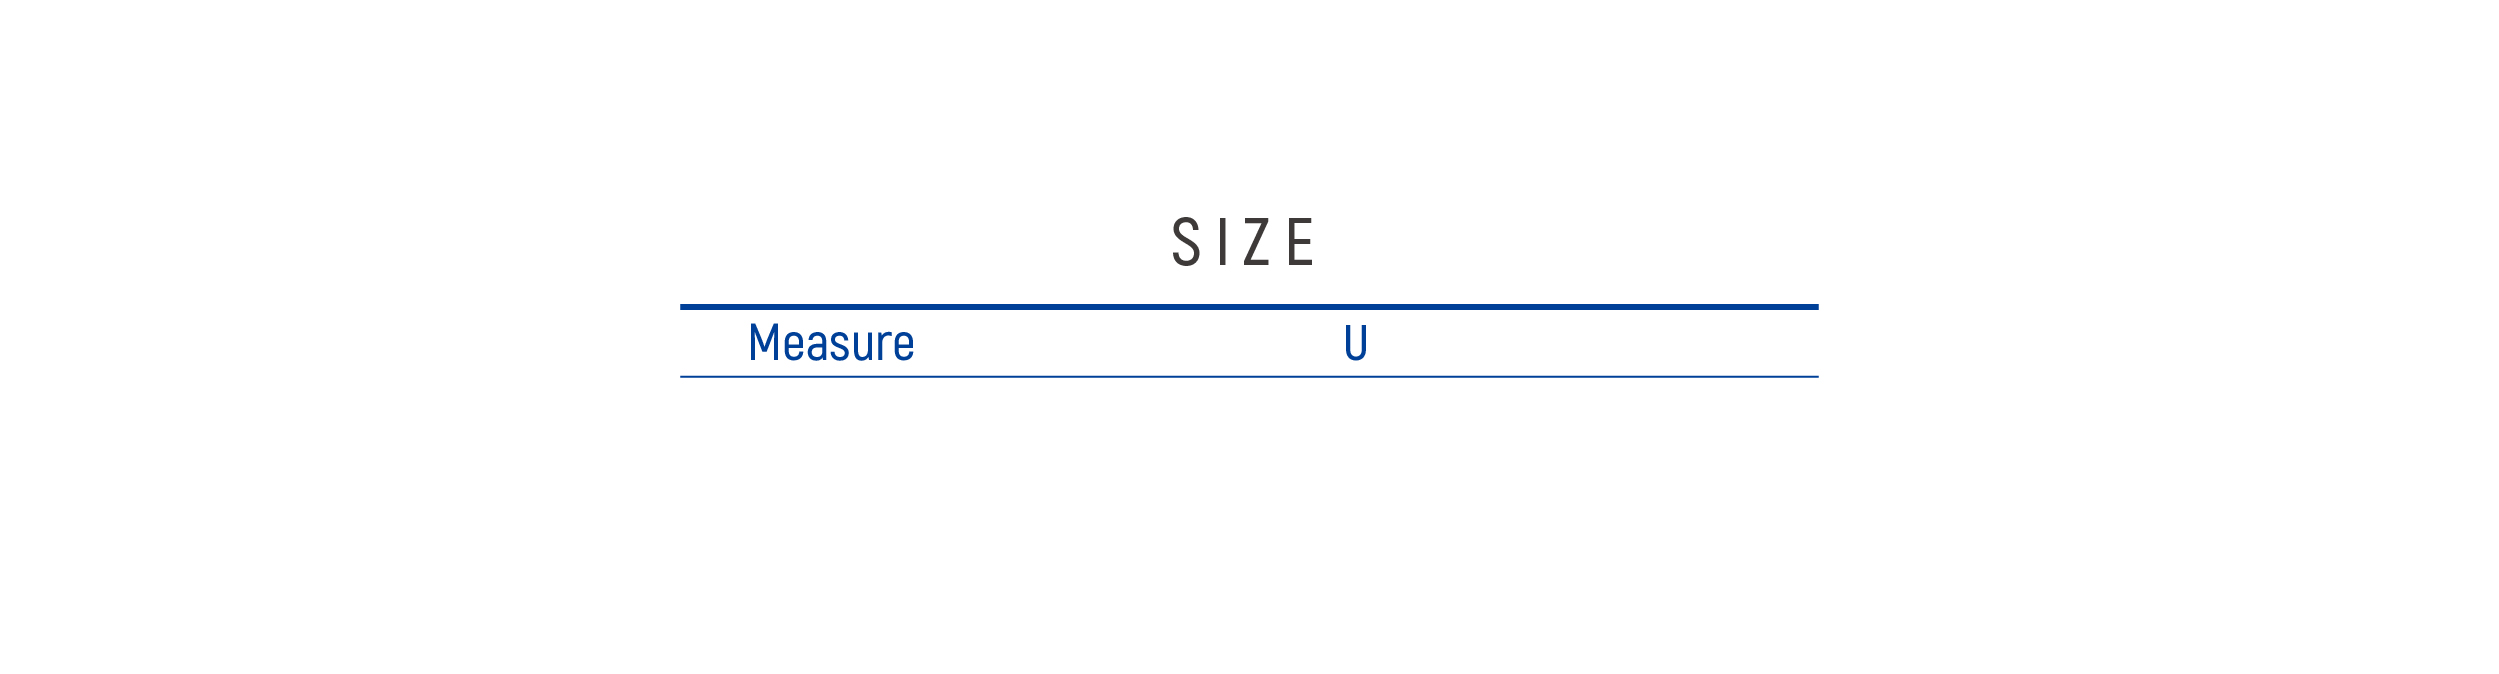 DR-E016 Size table image